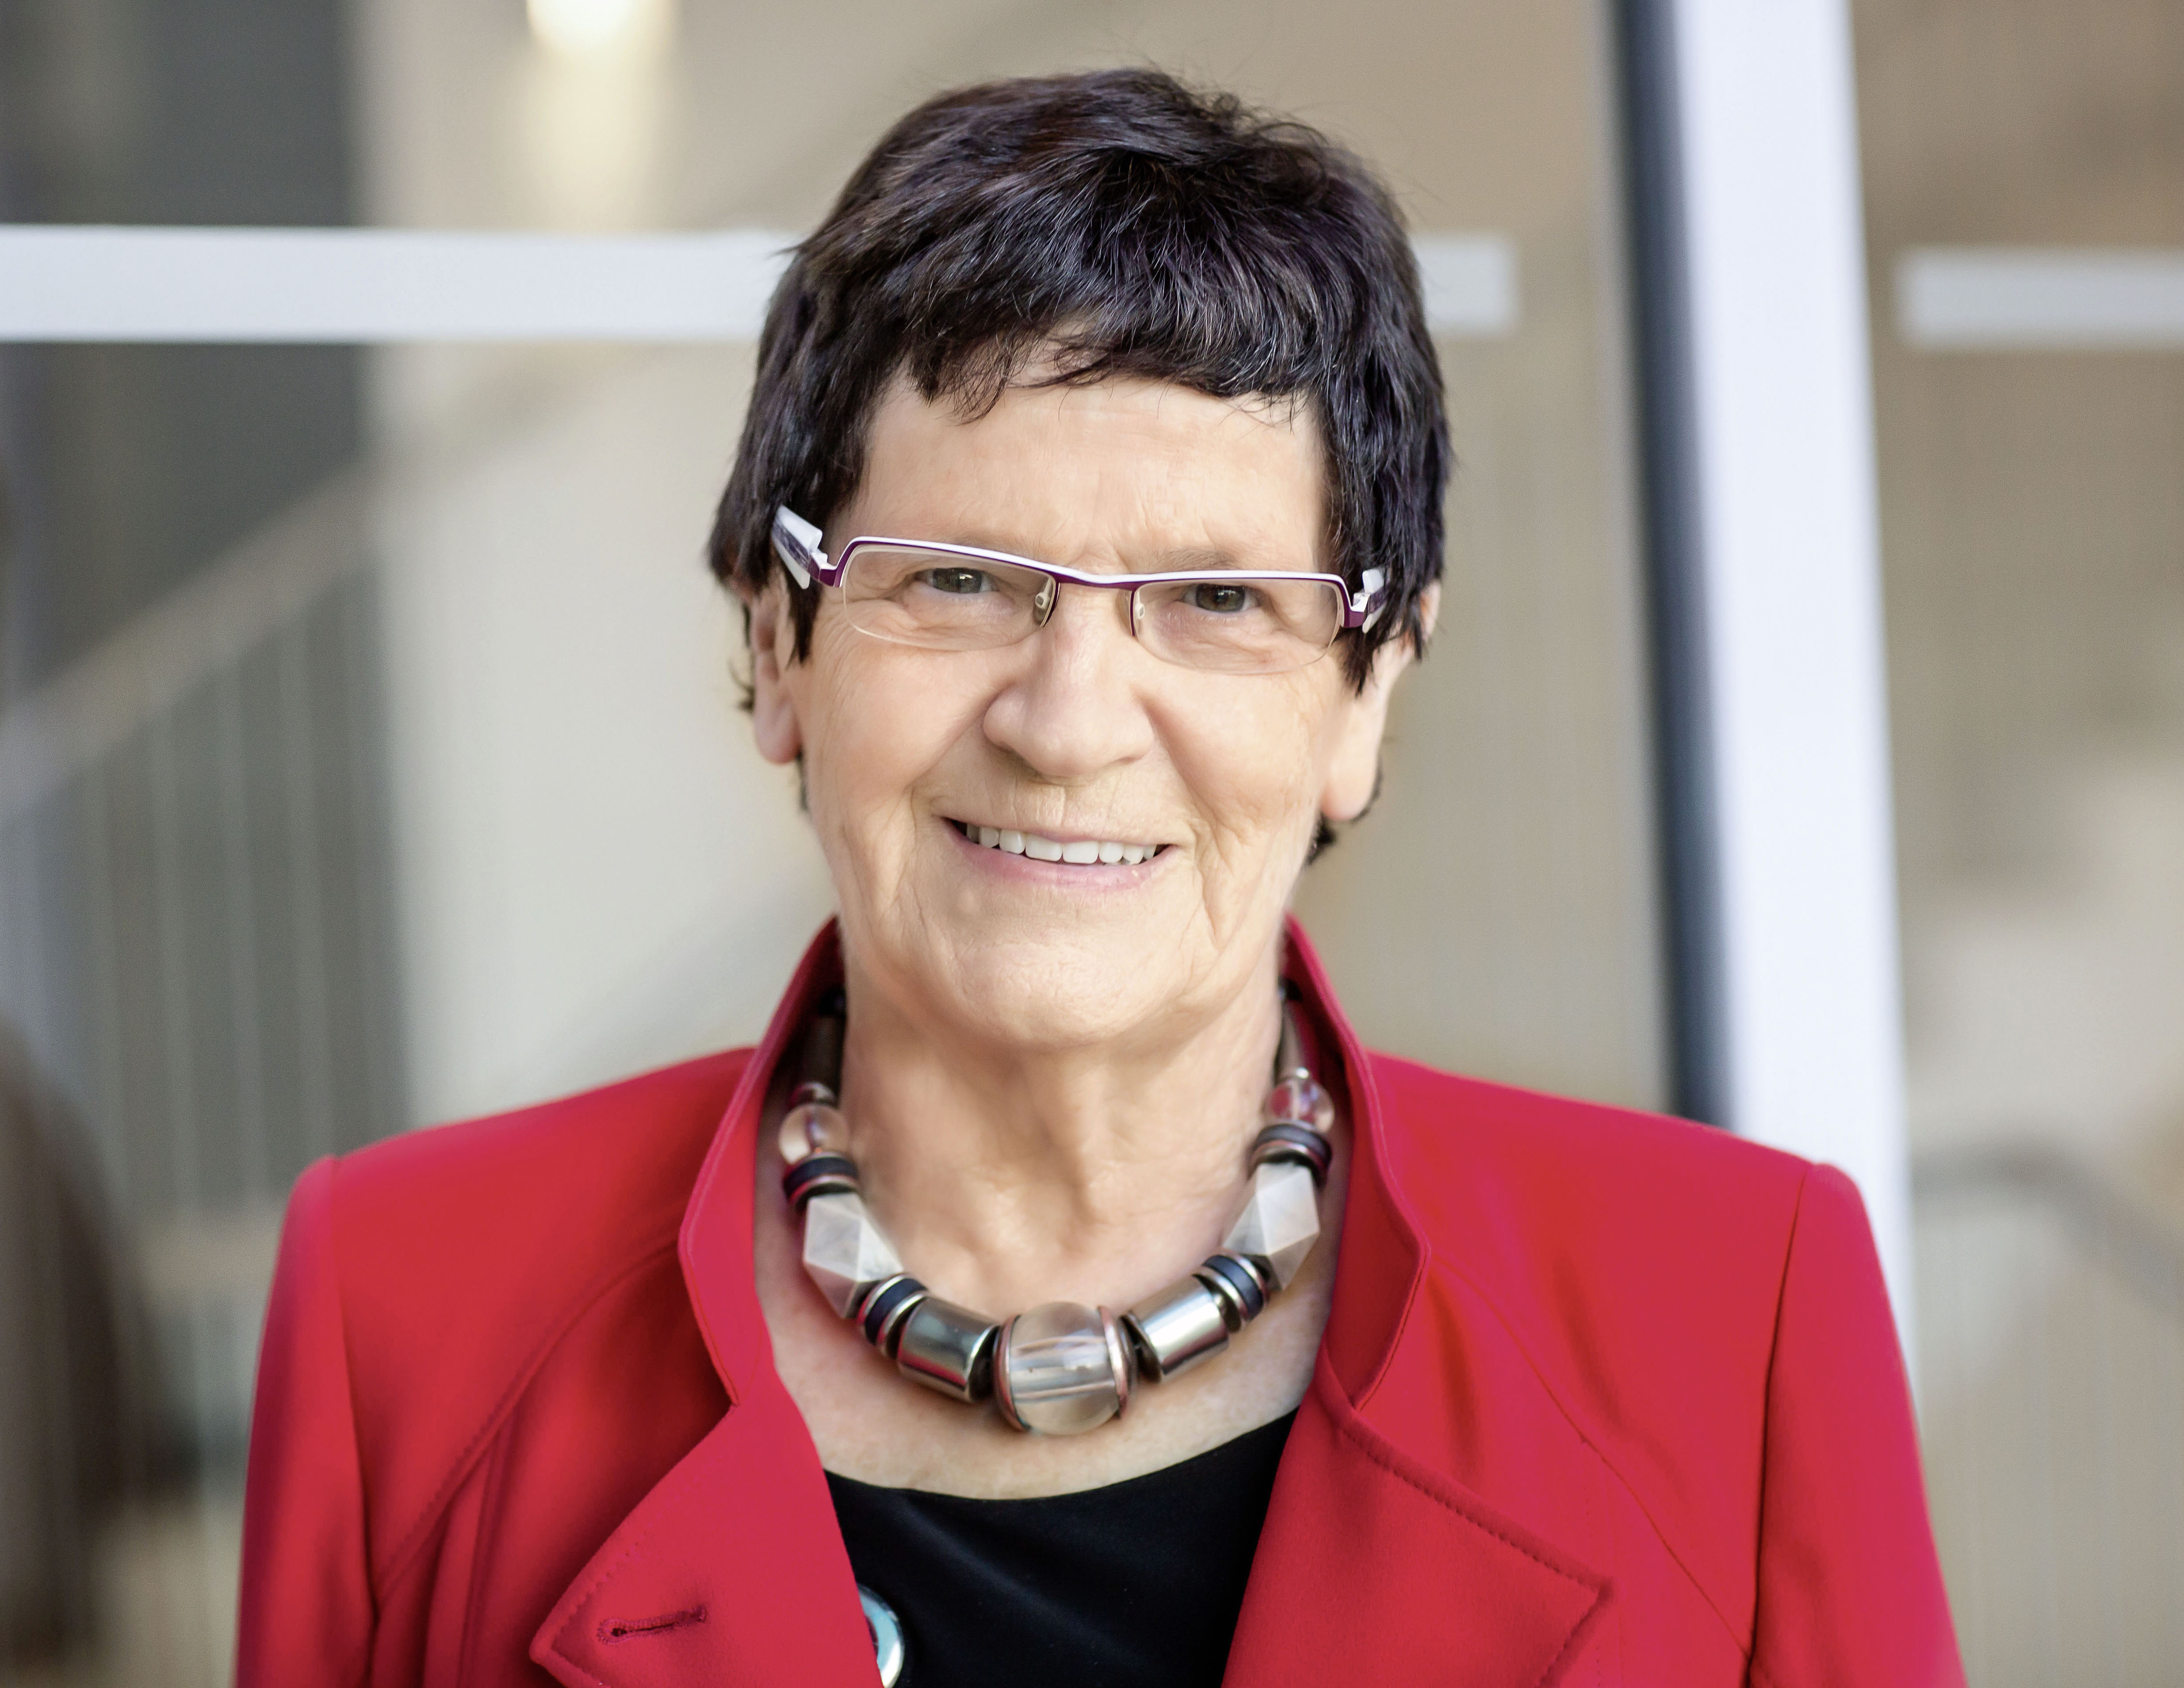 President, Prof. Rita Süssmuth